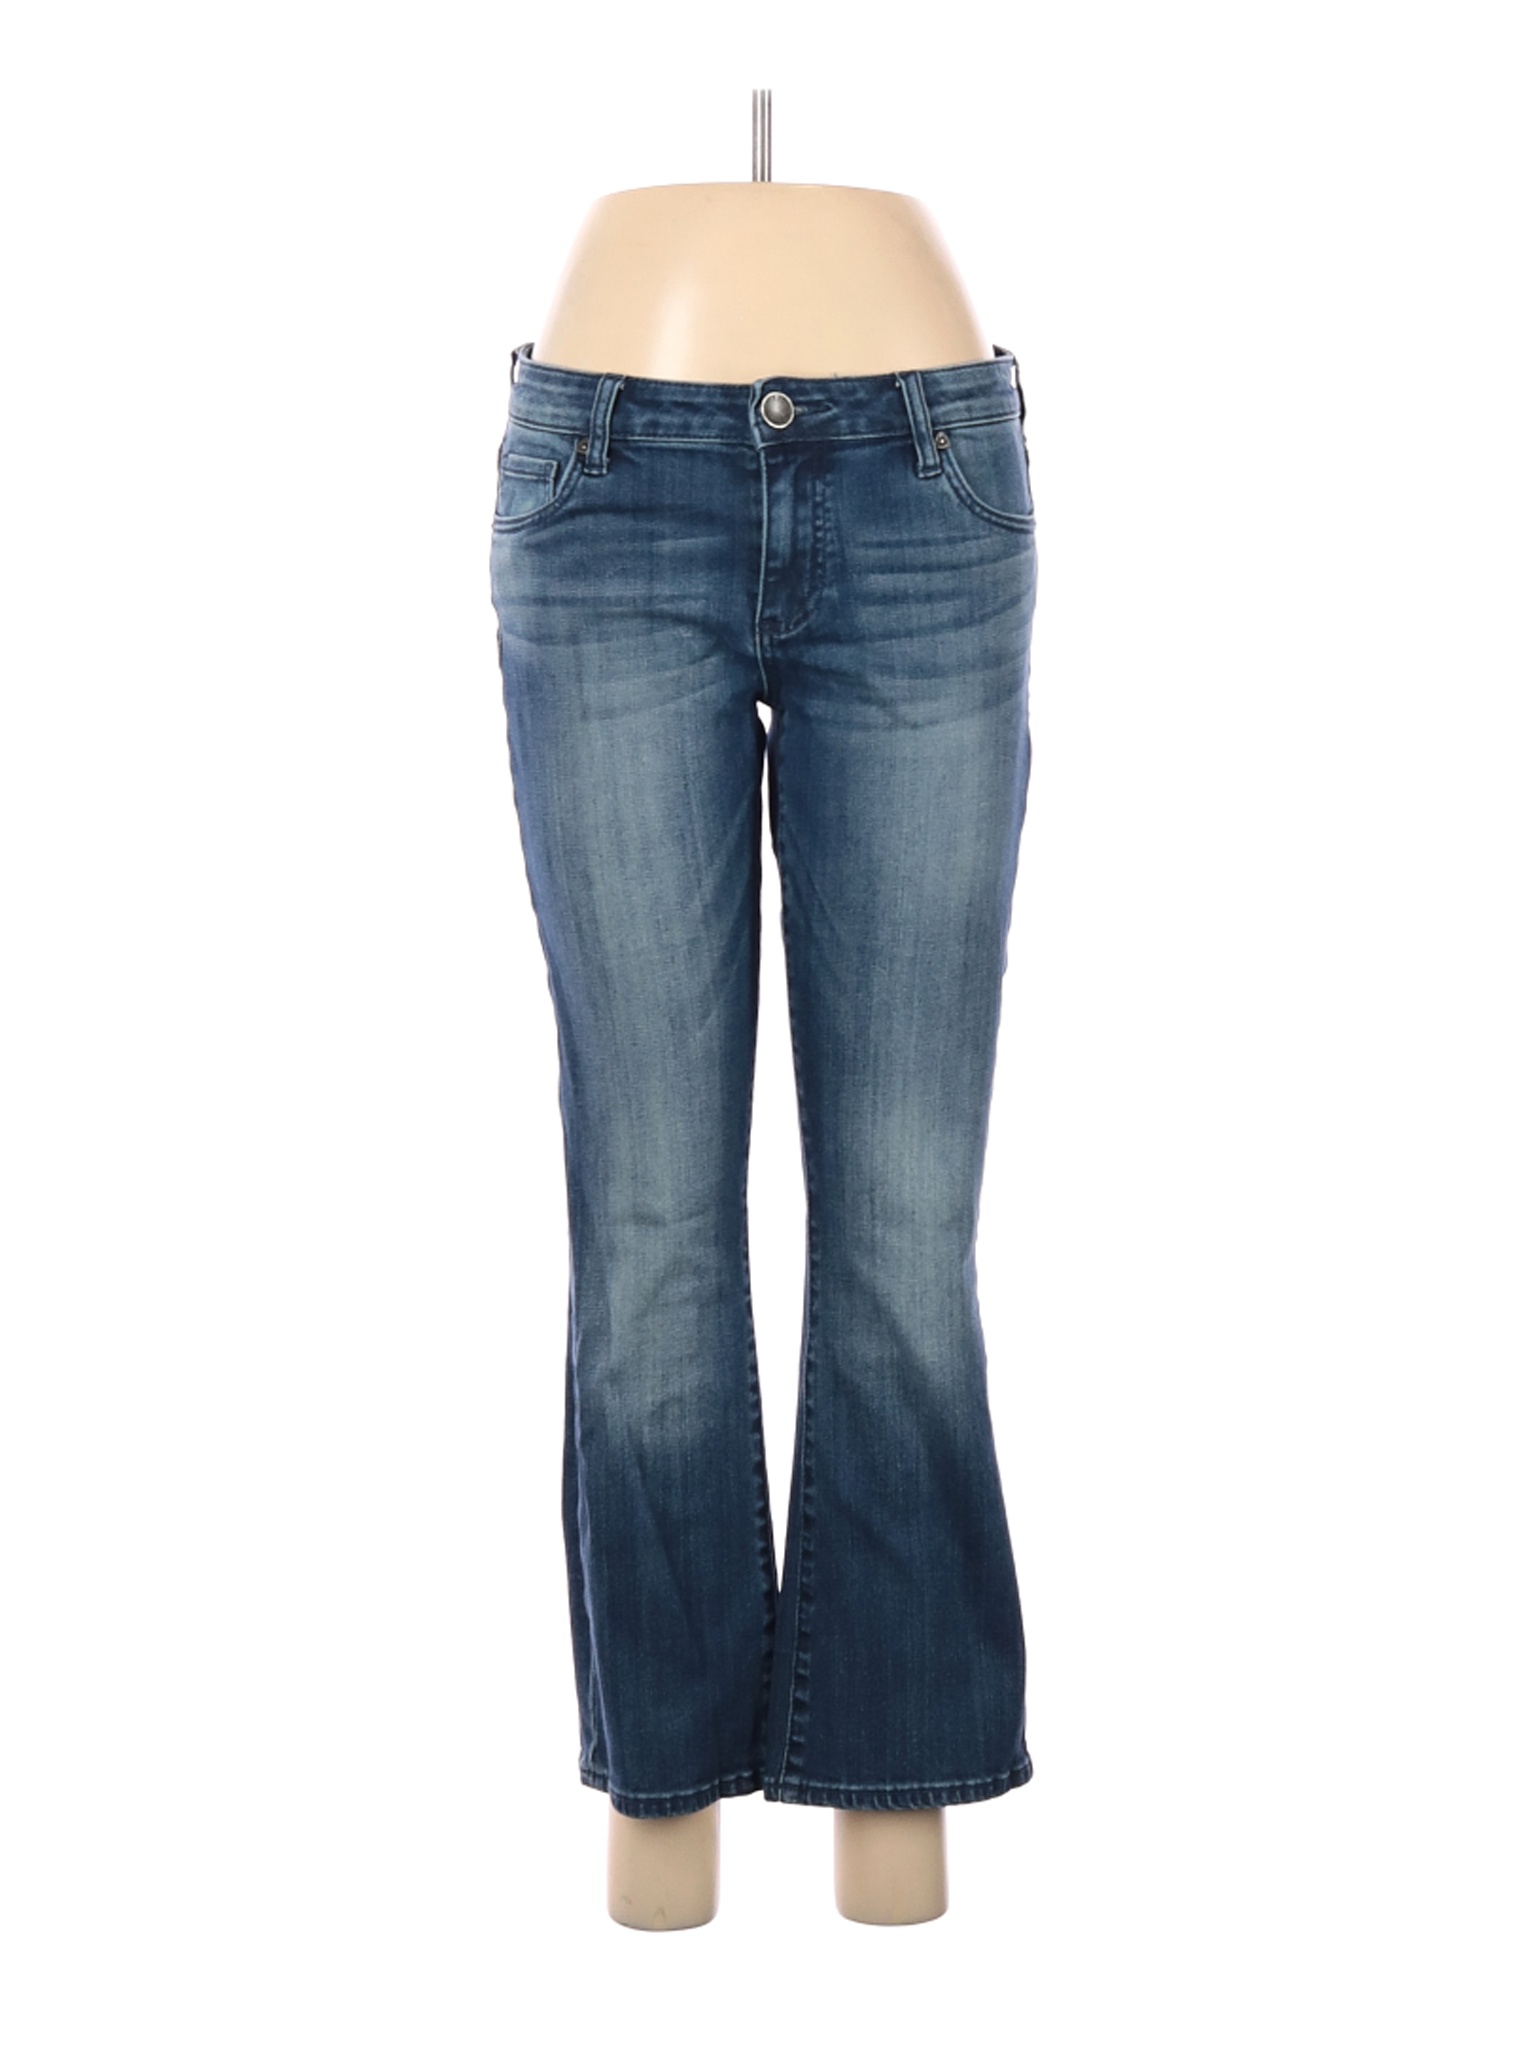 NWT Assorted Brands Women Blue Jeans 6 | eBay